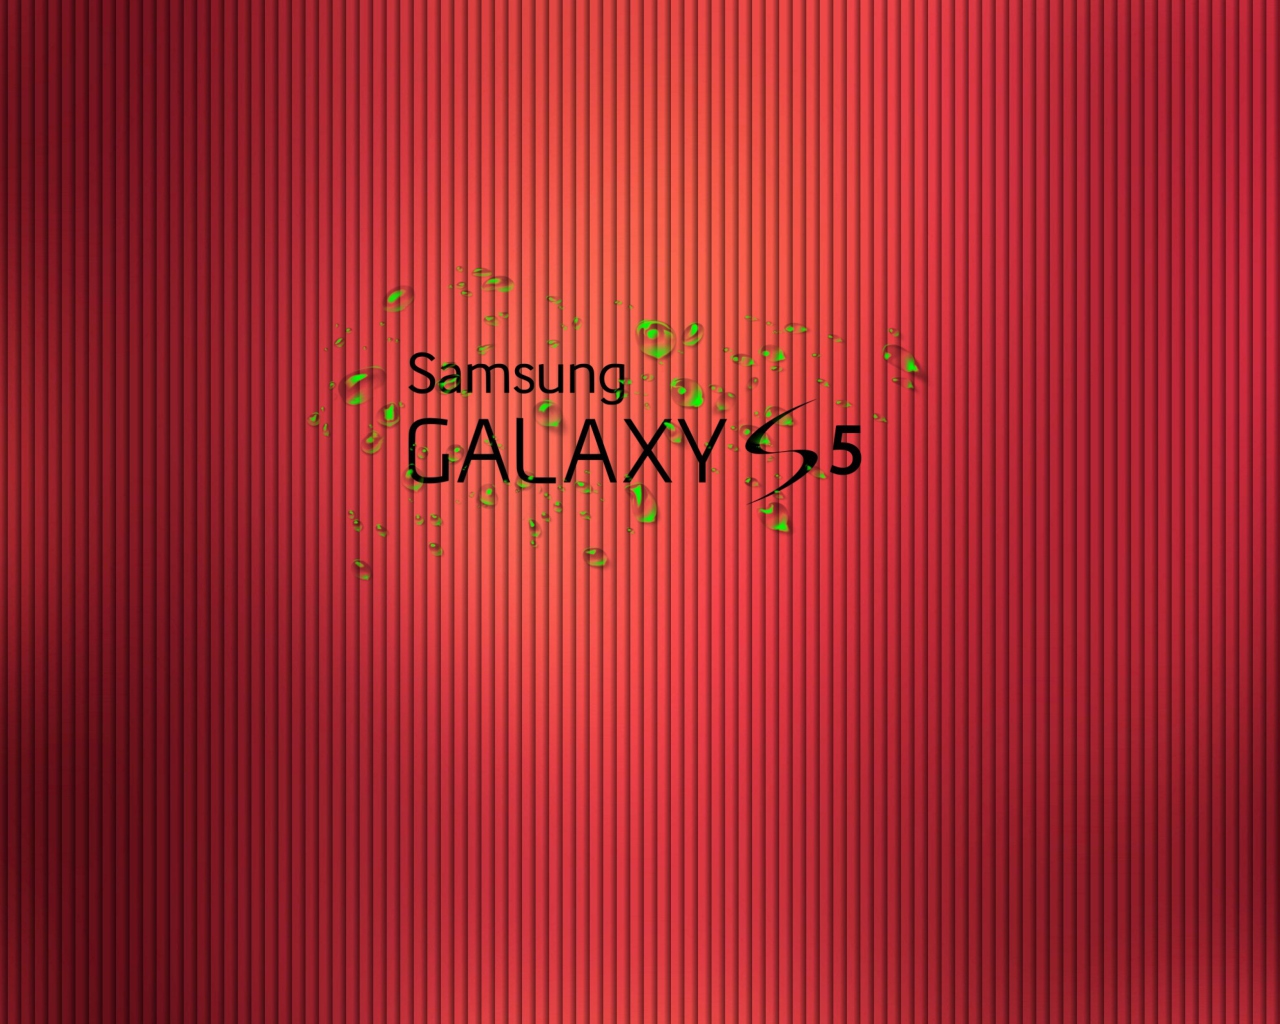 Das Galaxy S5 Wallpaper 1280x1024